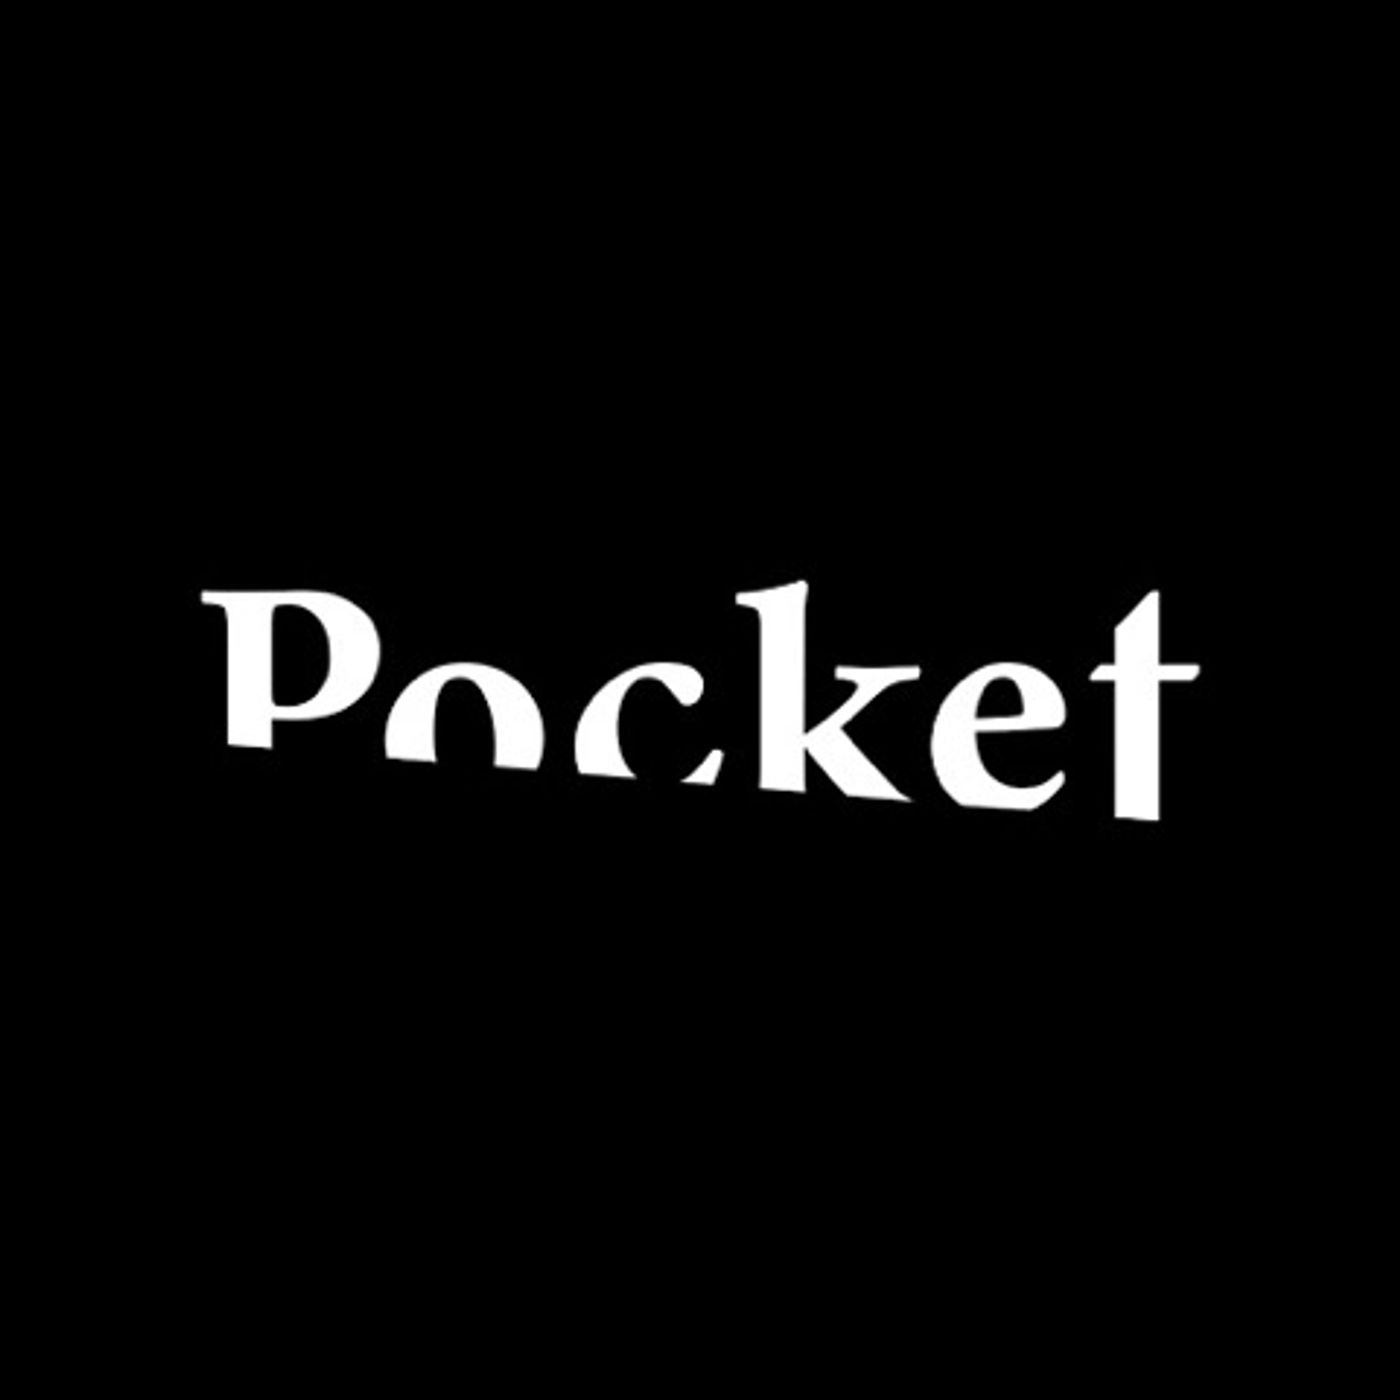 Pocket Call by Pocket Skateboard Magazine